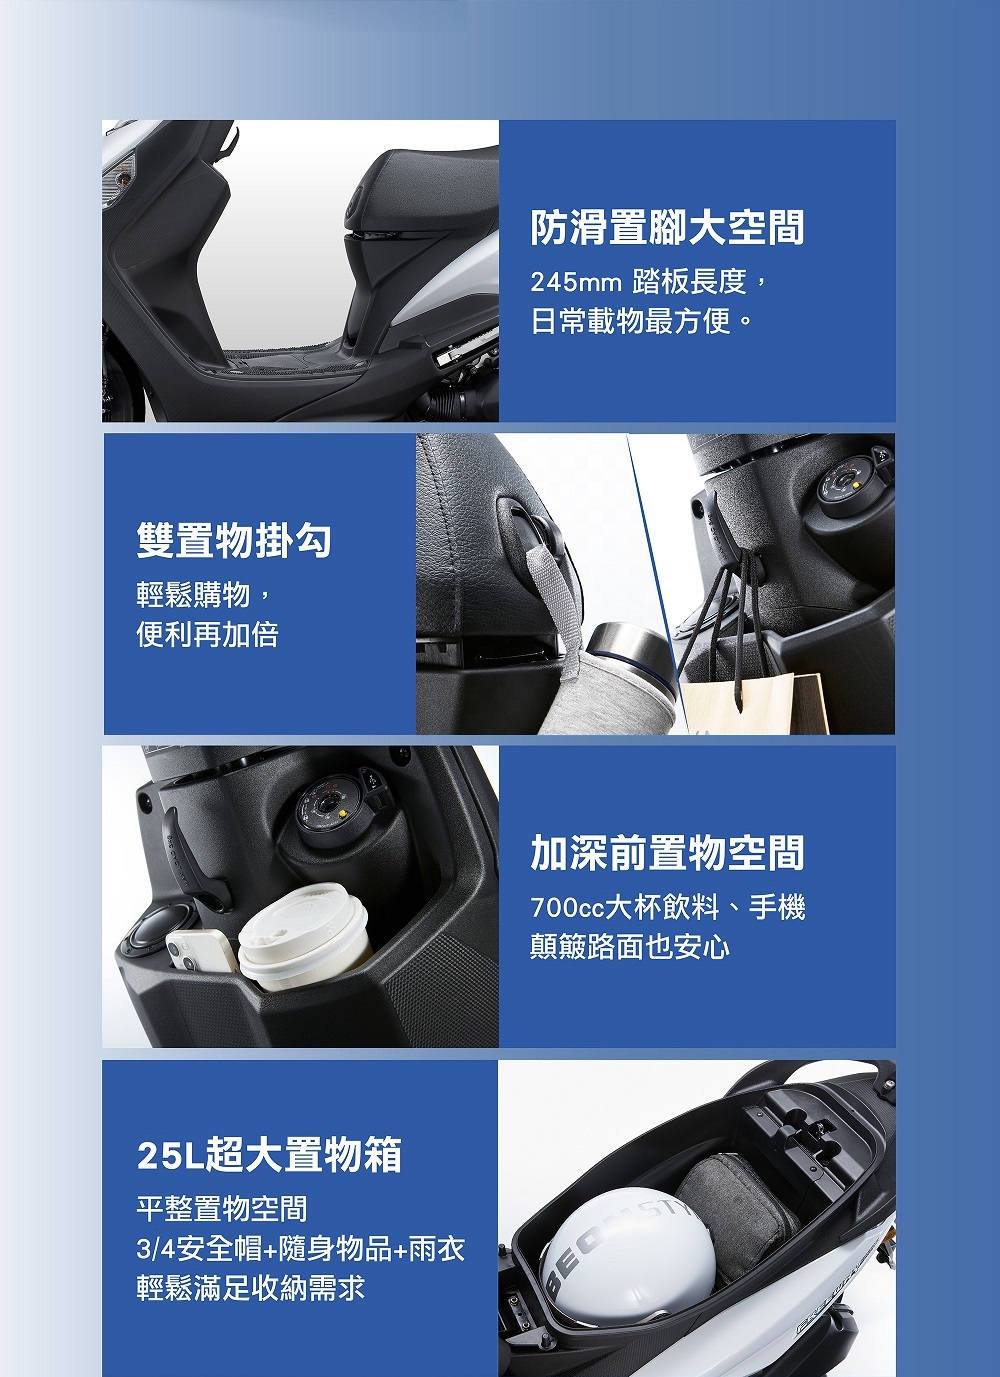 KYMCO 光陽 新豪邁125 鼓煞 MMC 七期 機車(2